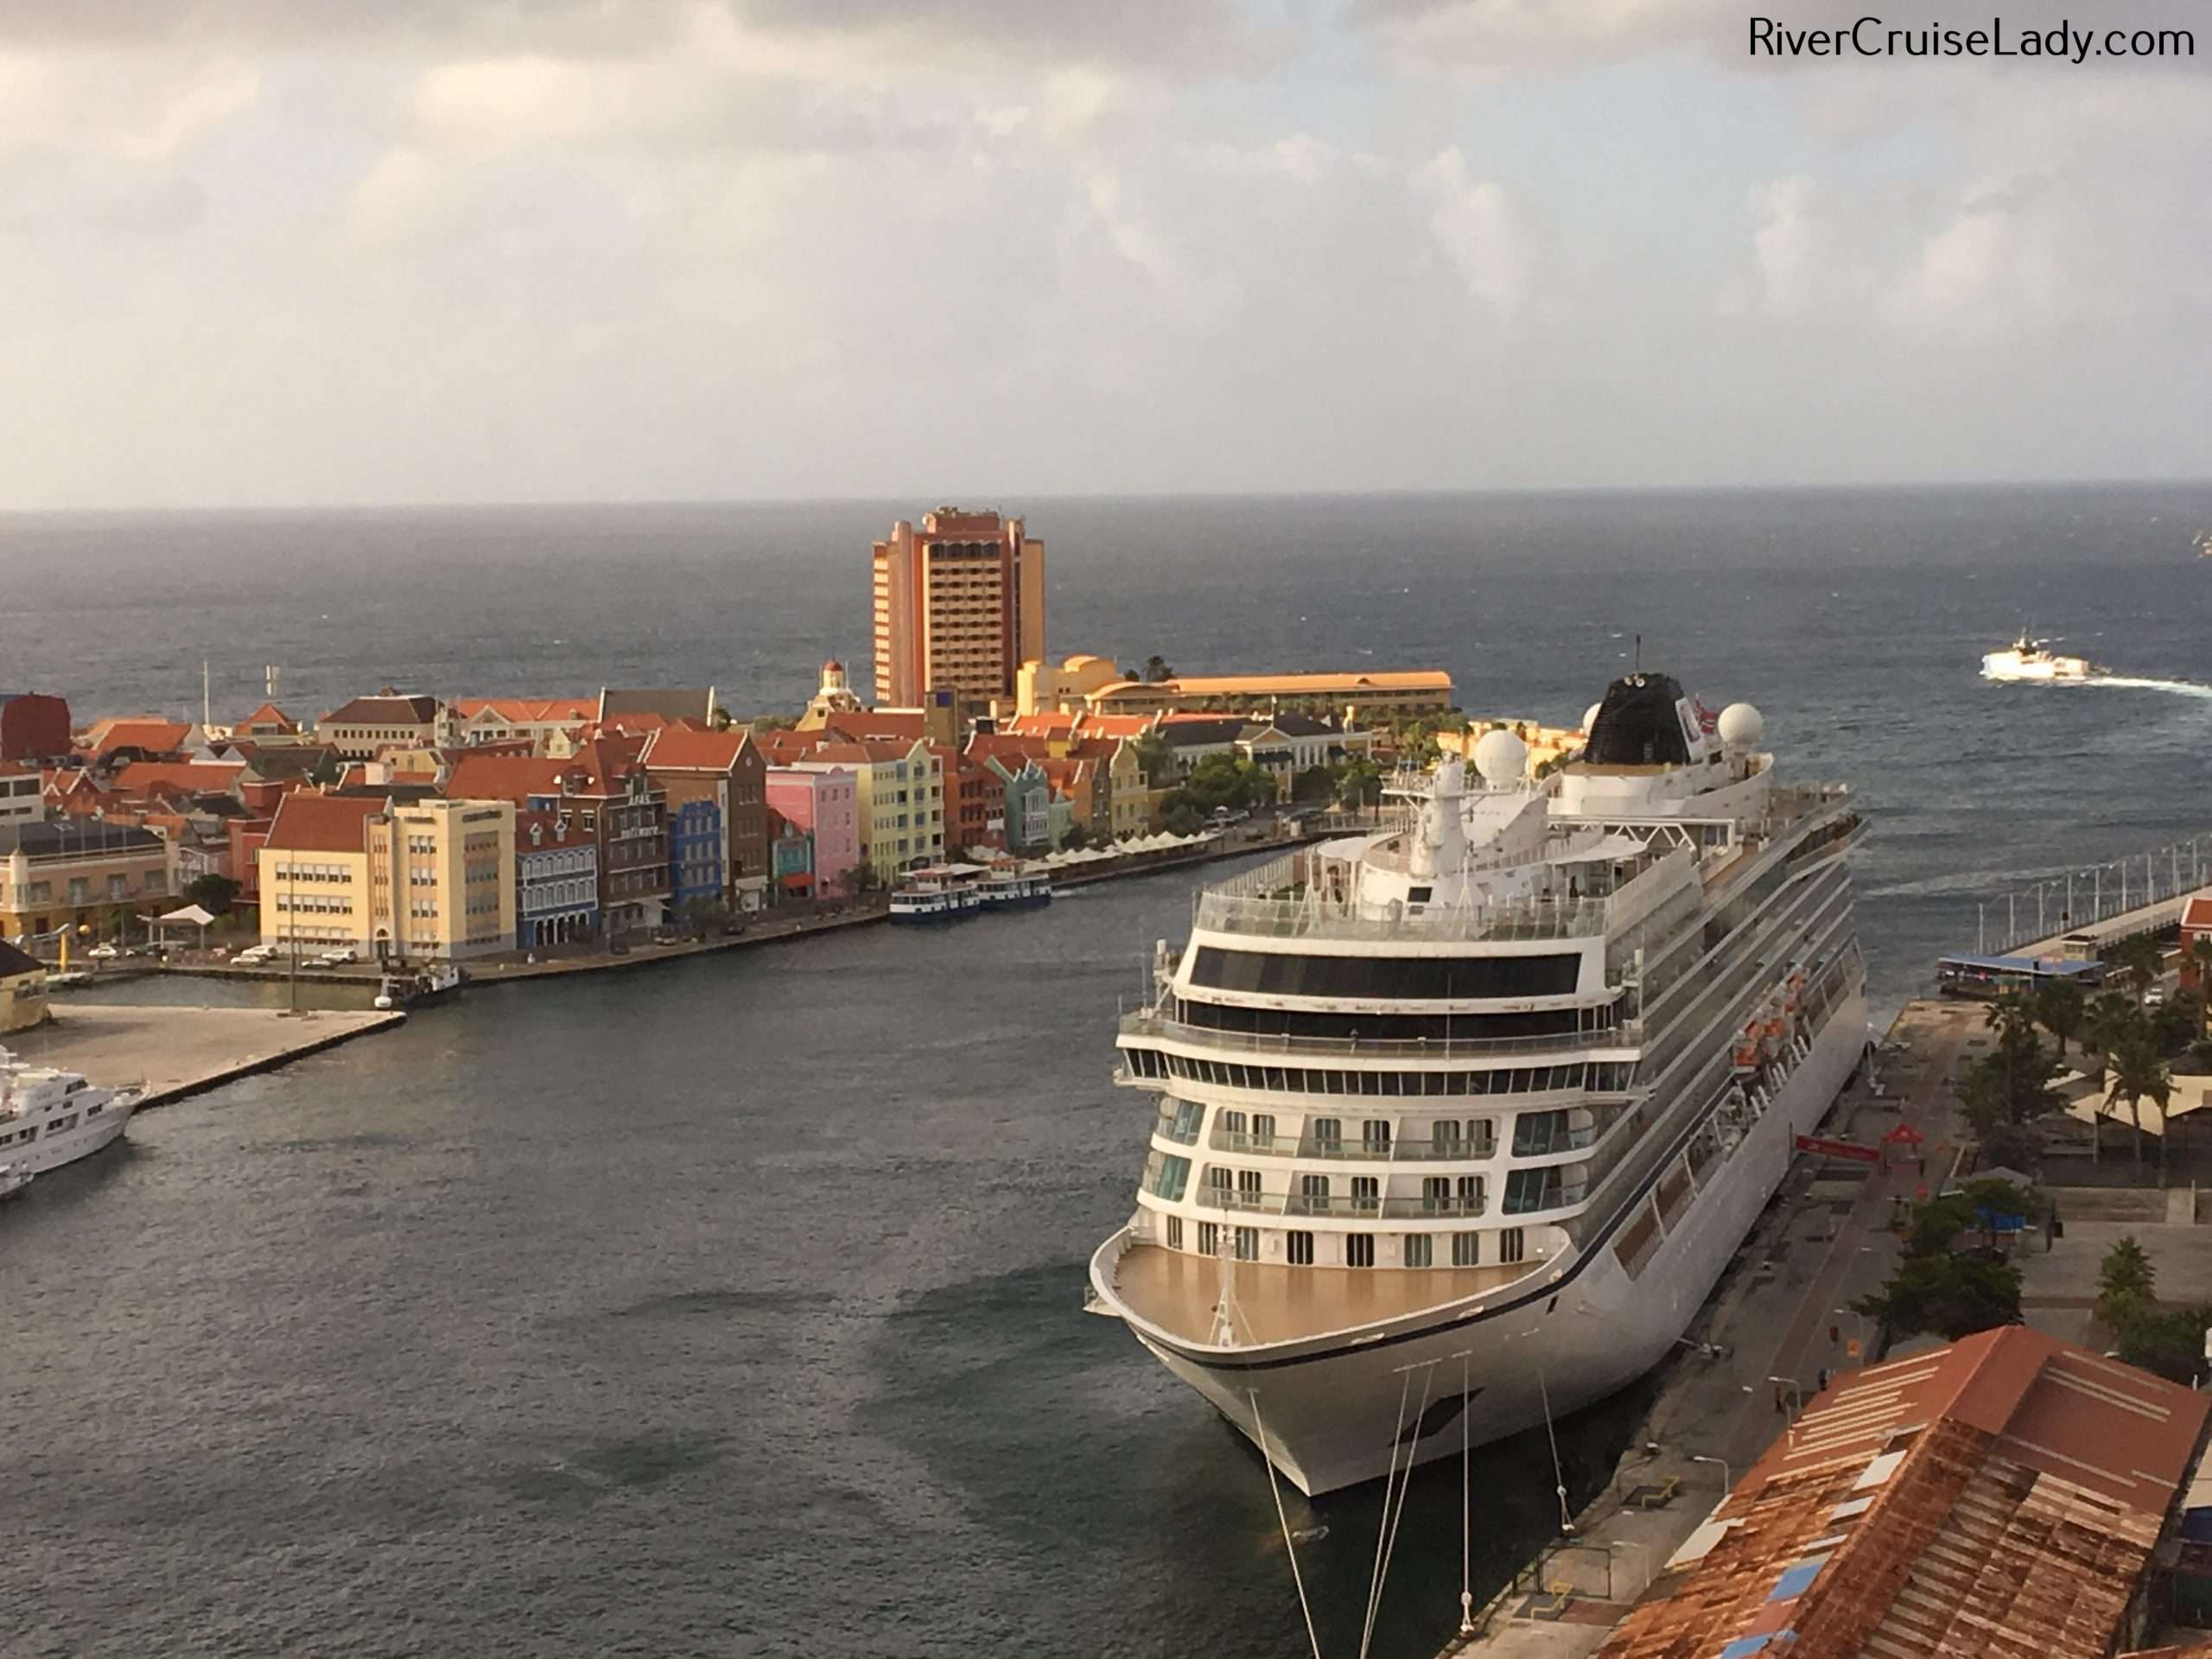 Viking River Cruise transformed into Ocean Cruise!